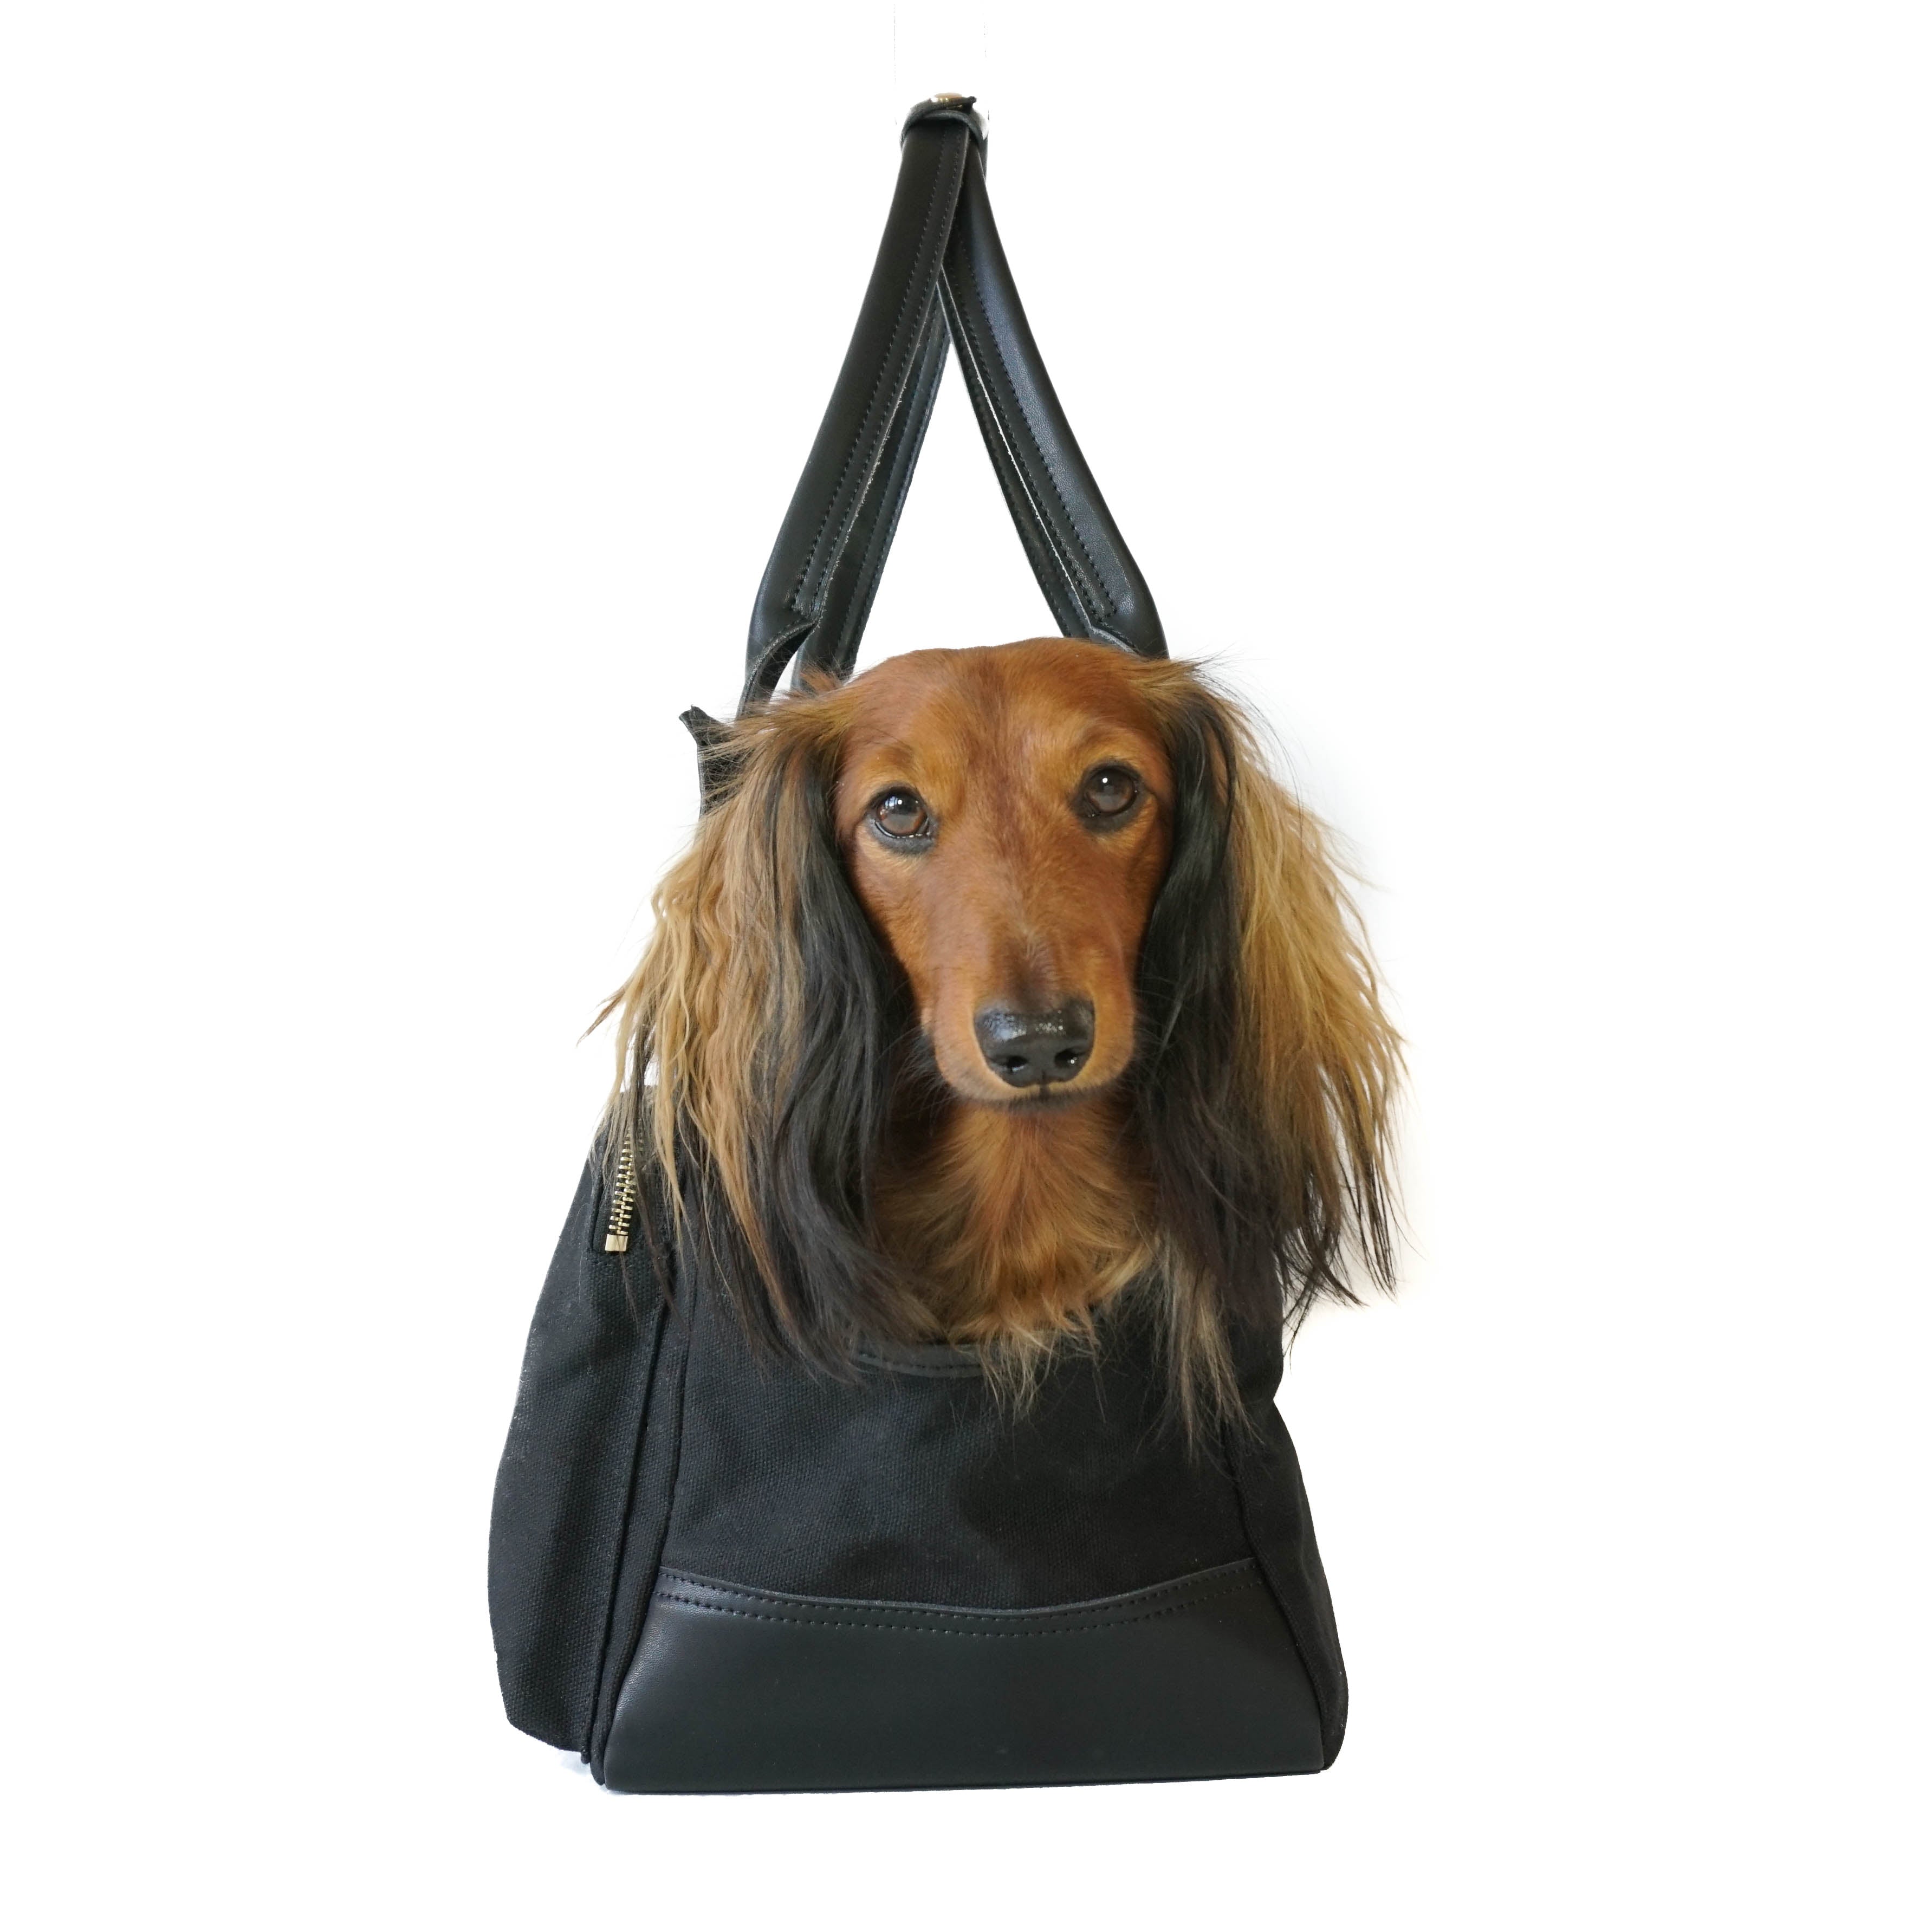 DJANGO Dog Carrier Bag - Waxed Canvas & Leather Dog Carry Bag - Black